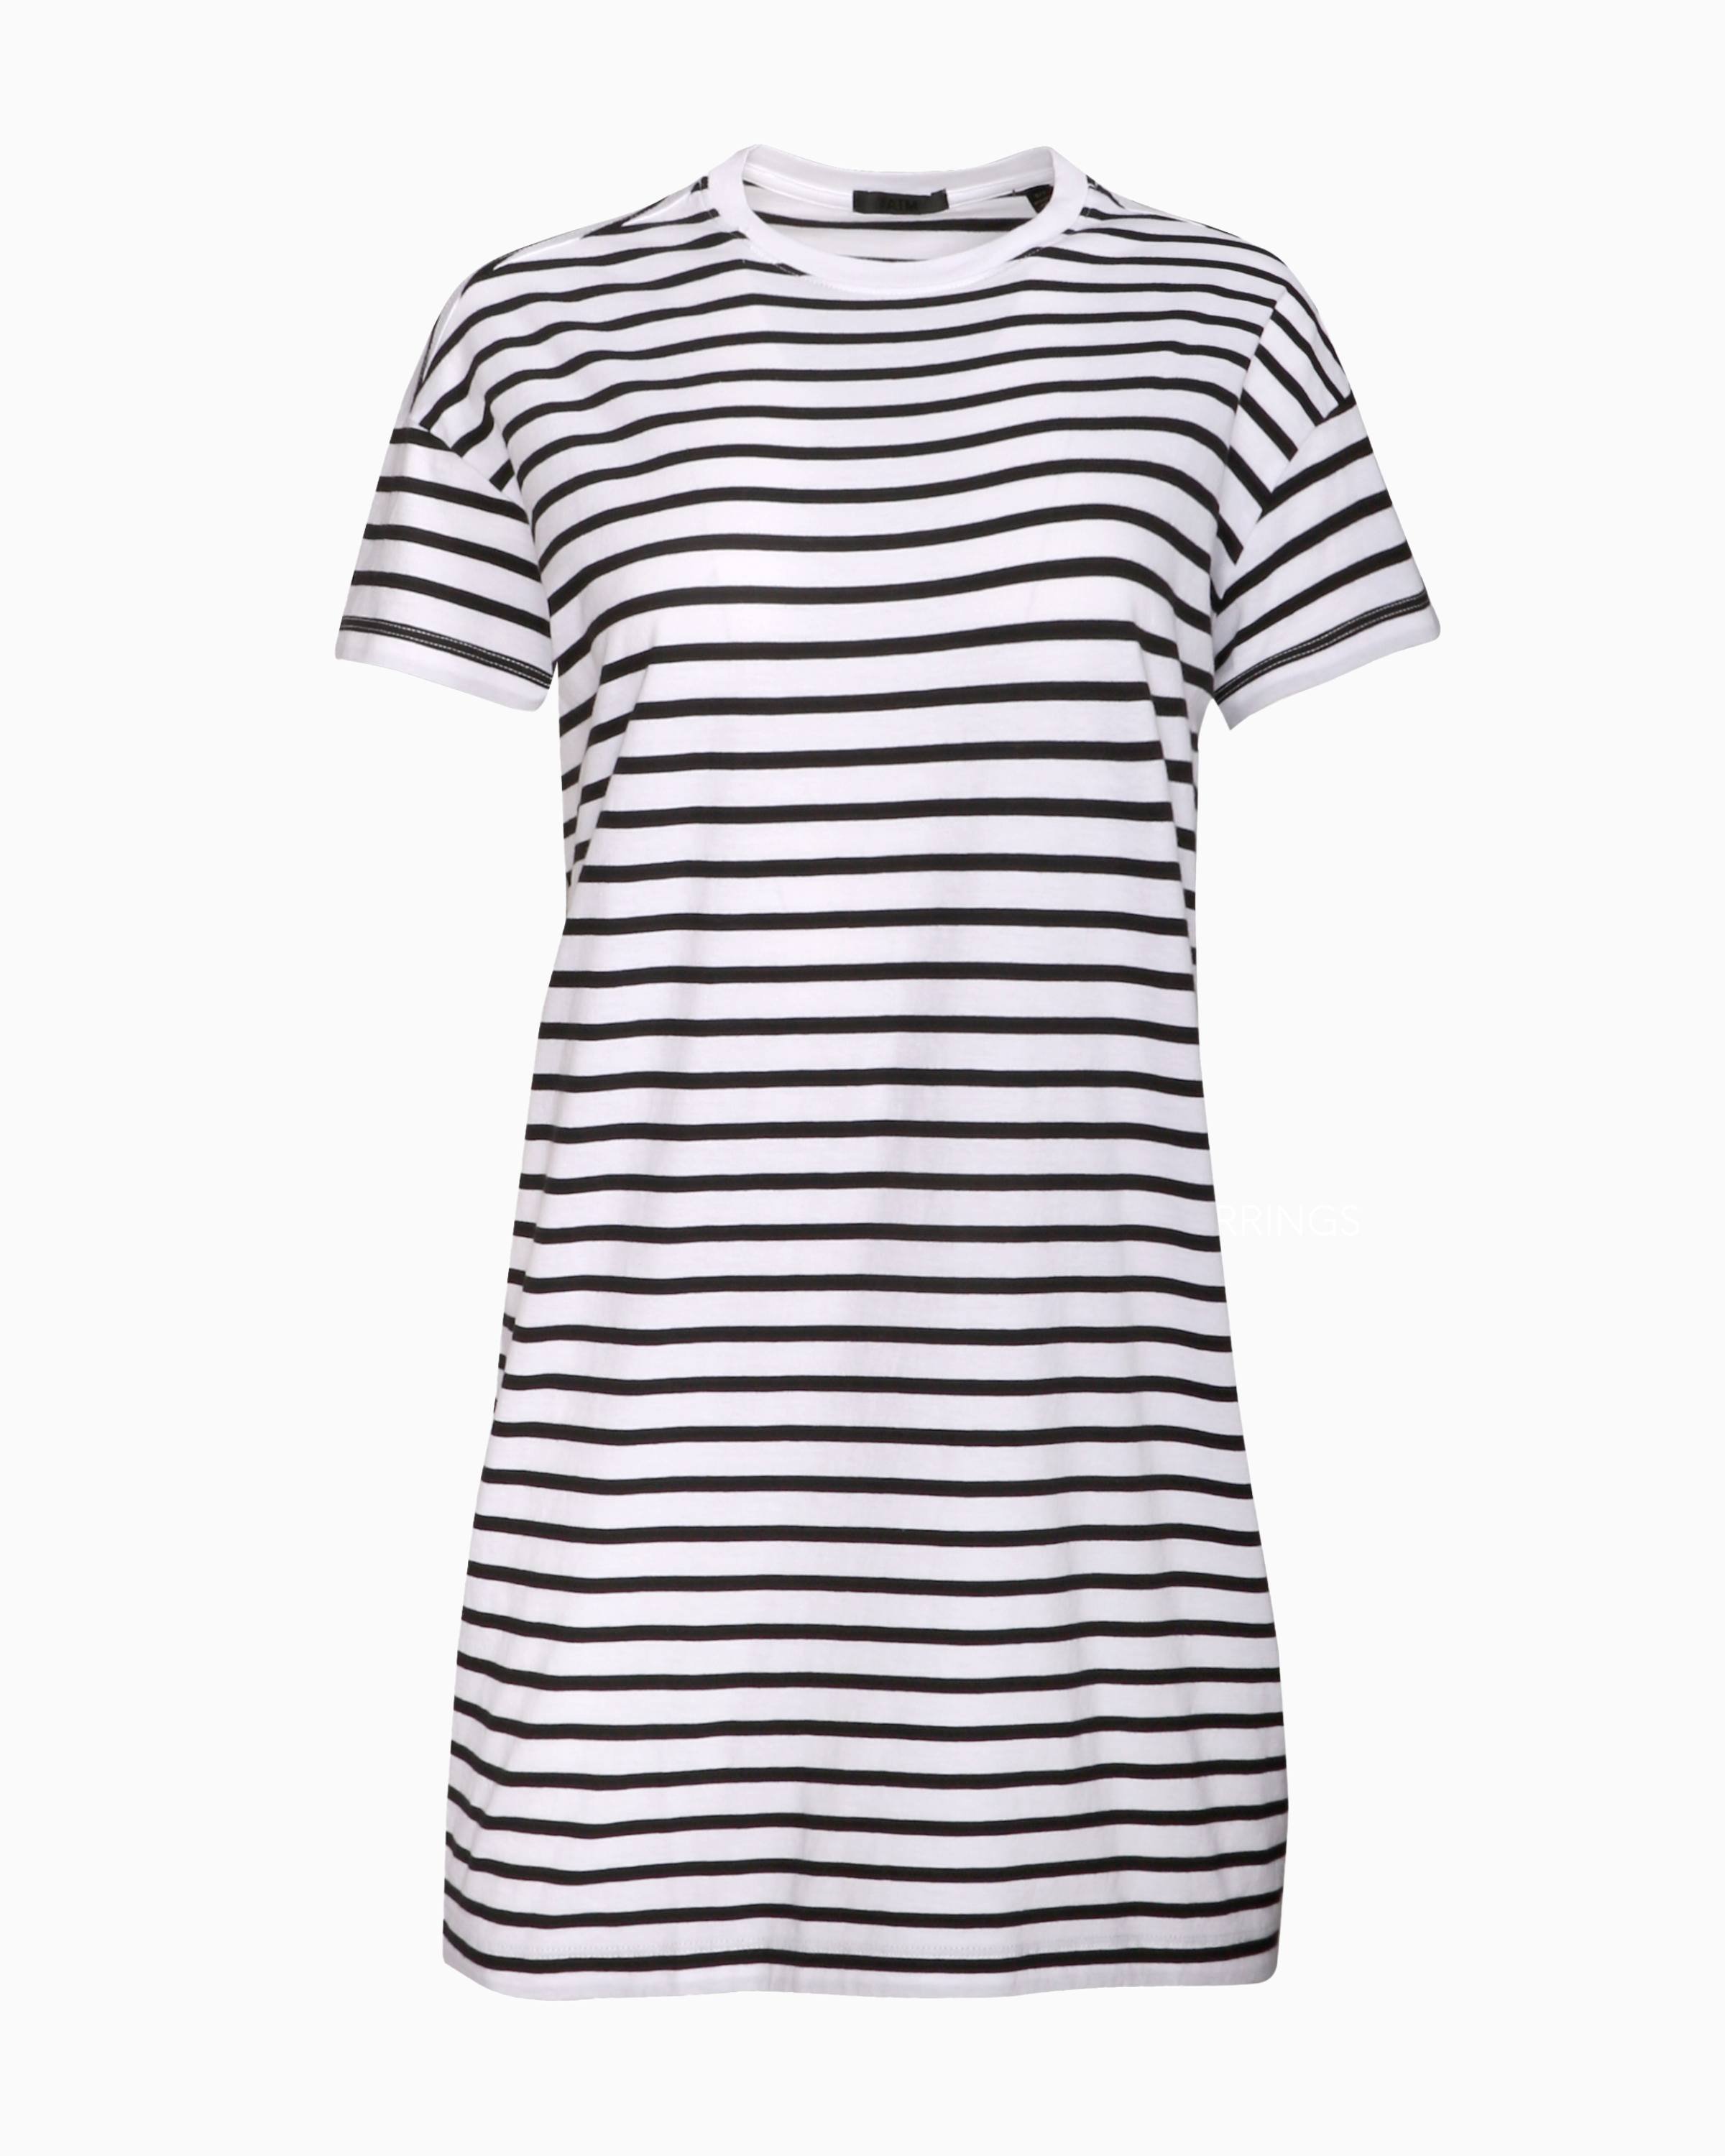 ATM Jersey Stripe T-Shirt Dress in Black/White